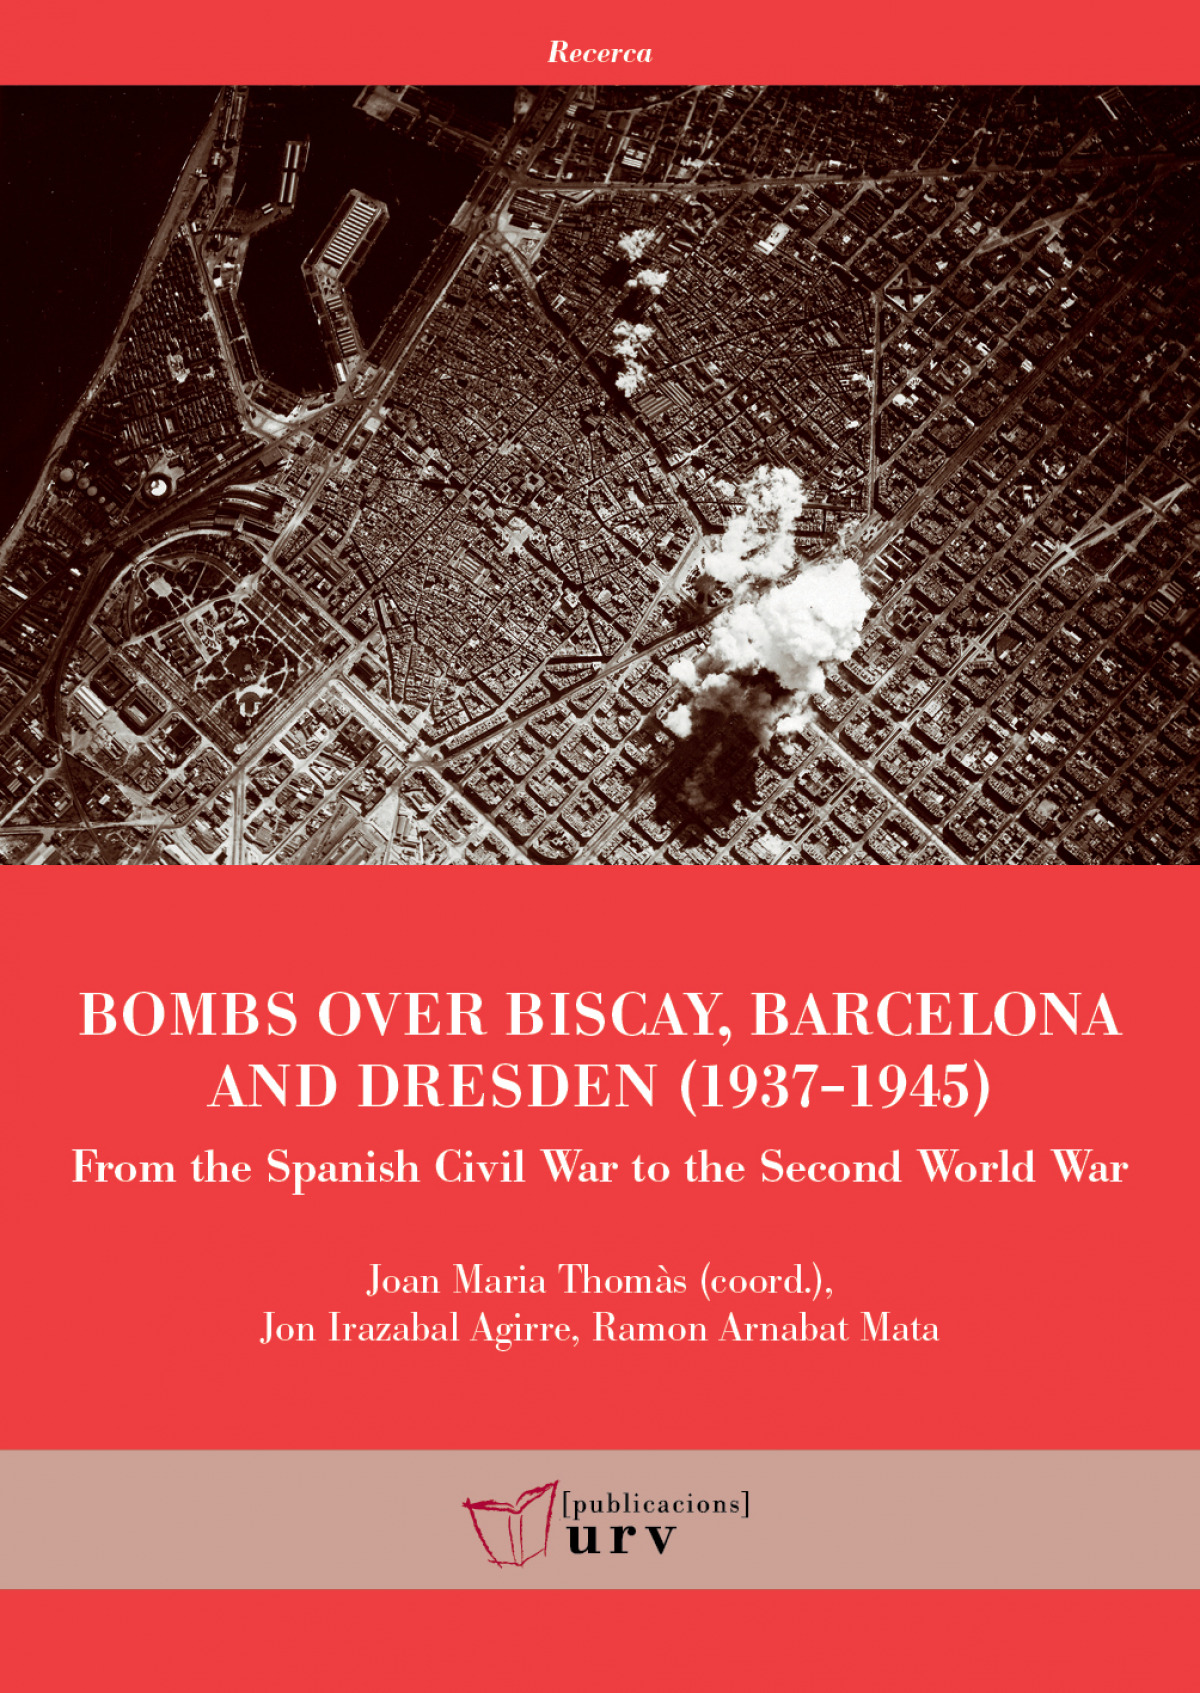 Bombs over biscay, barcelona and dresden - Ramon /Arnabat Mata